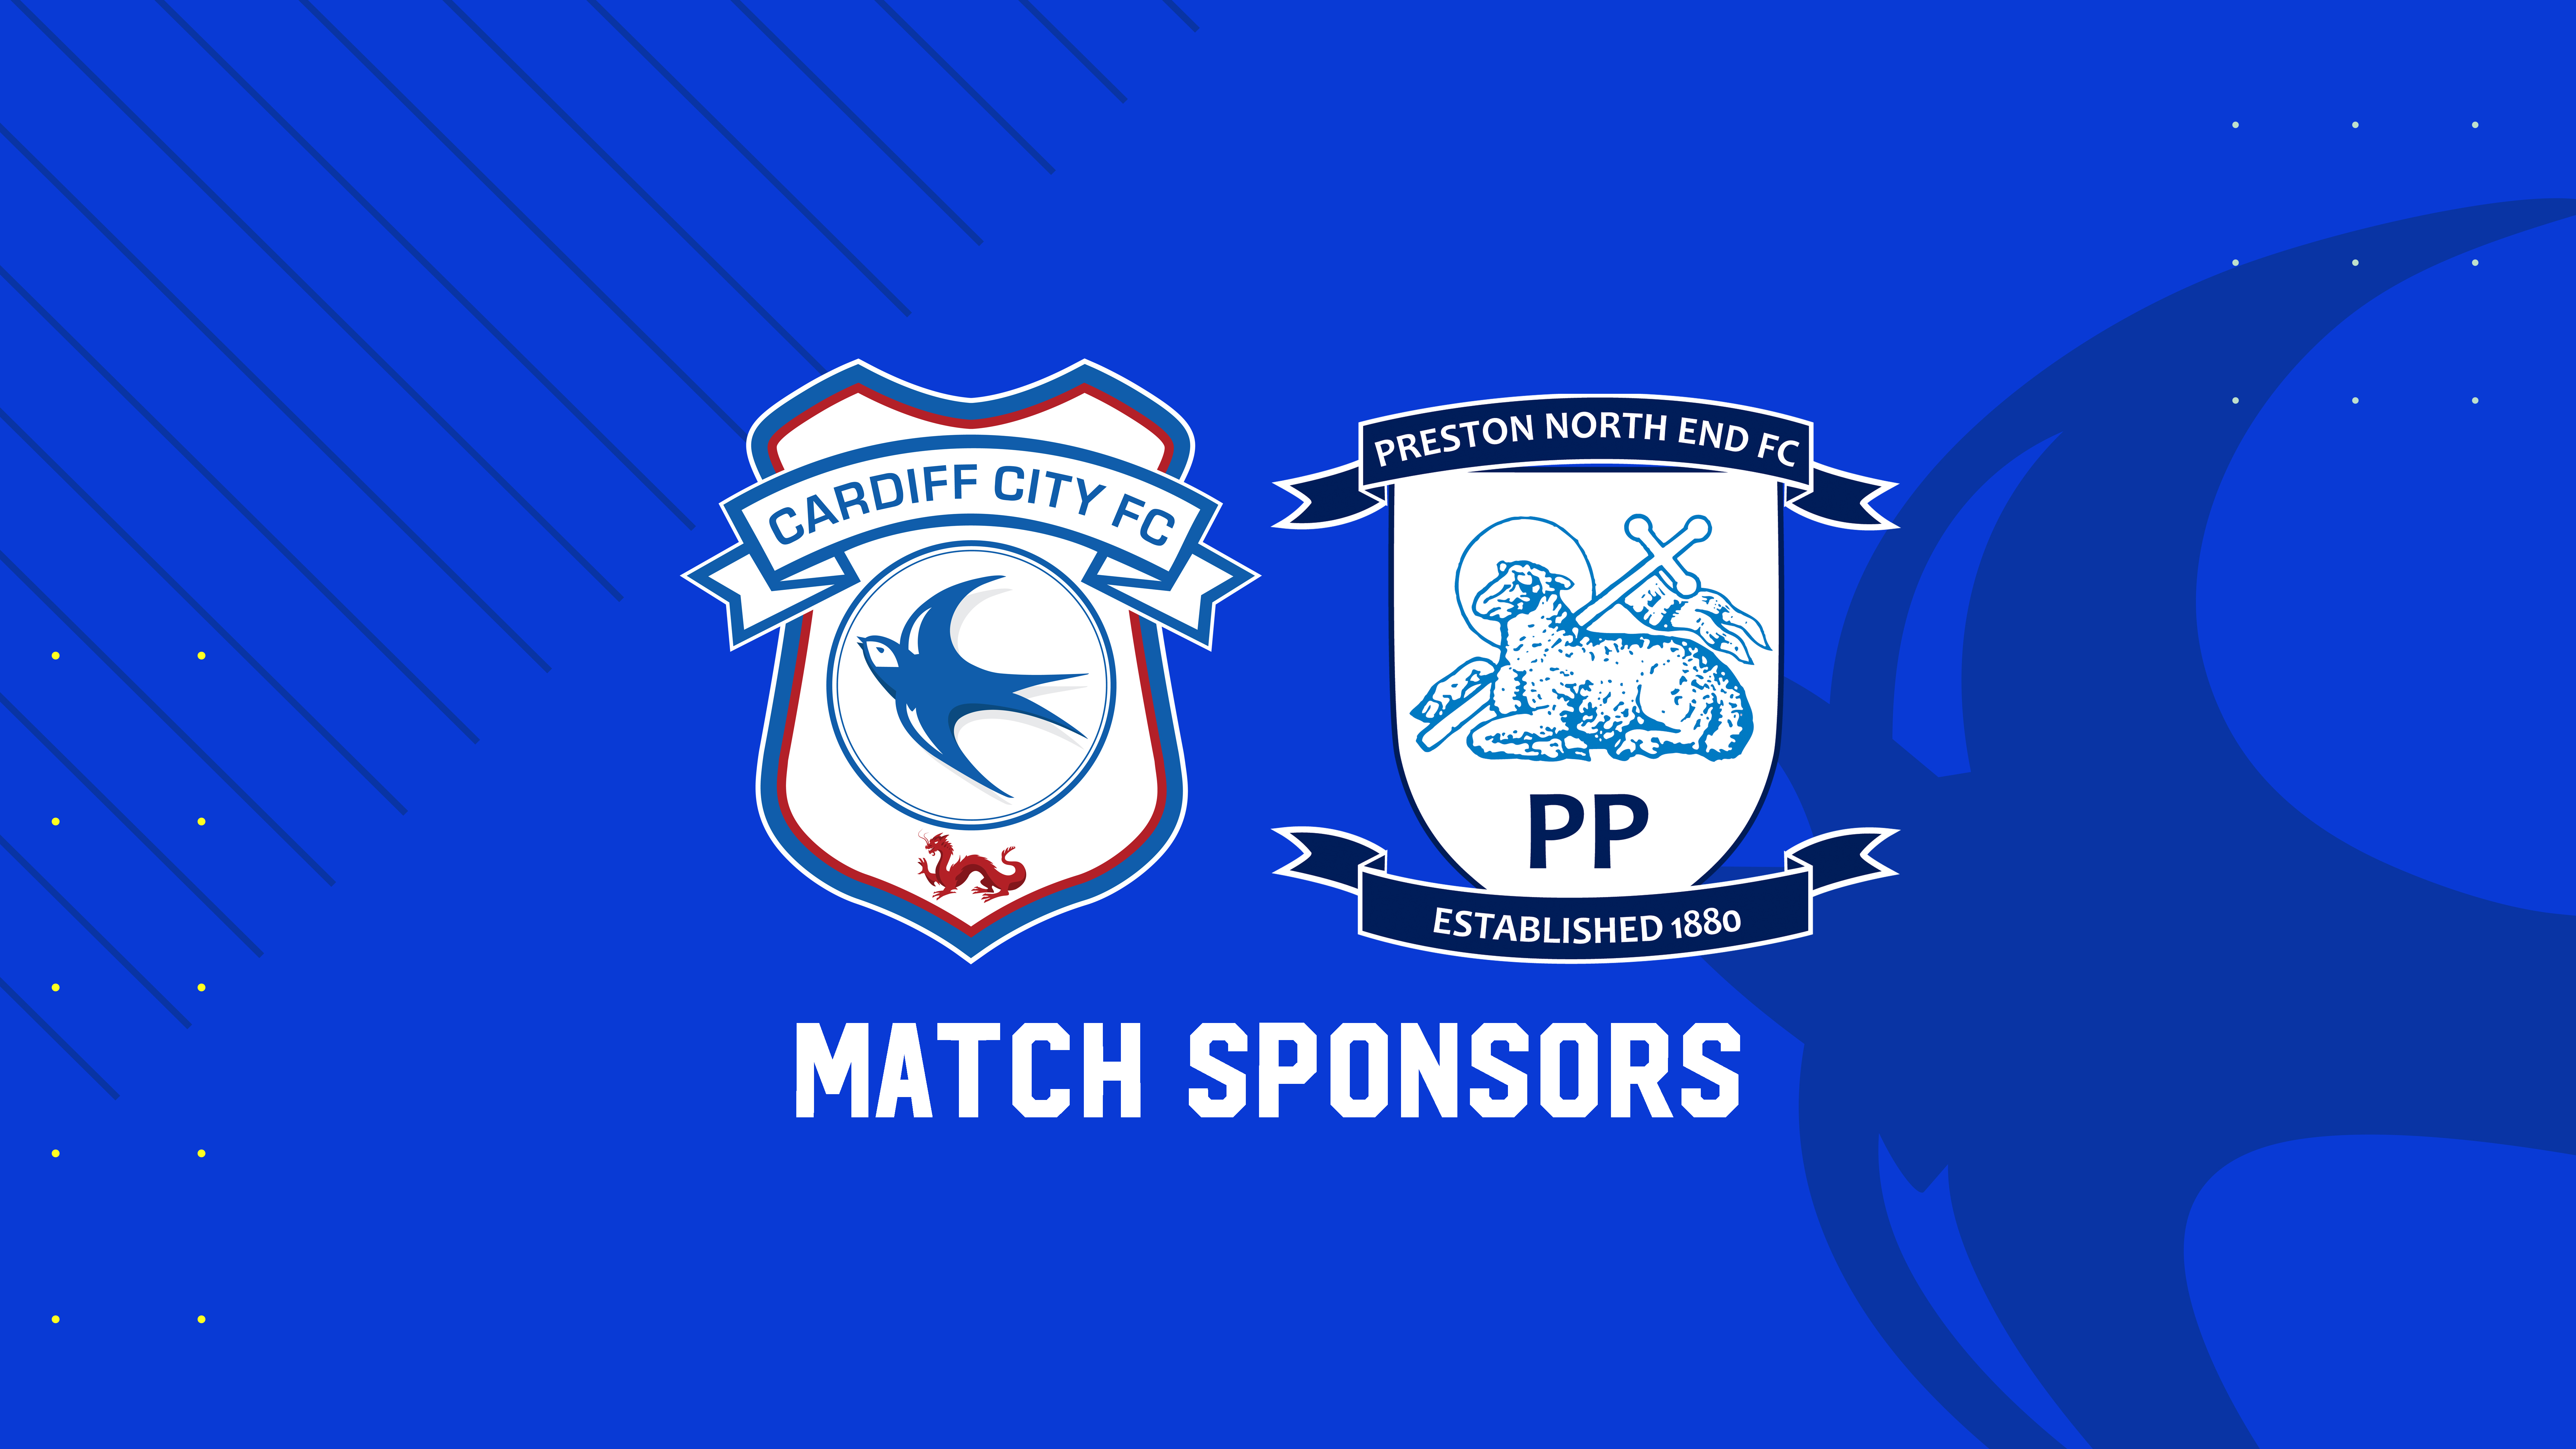 Match Sponsors | Cardiff City vs. PNE